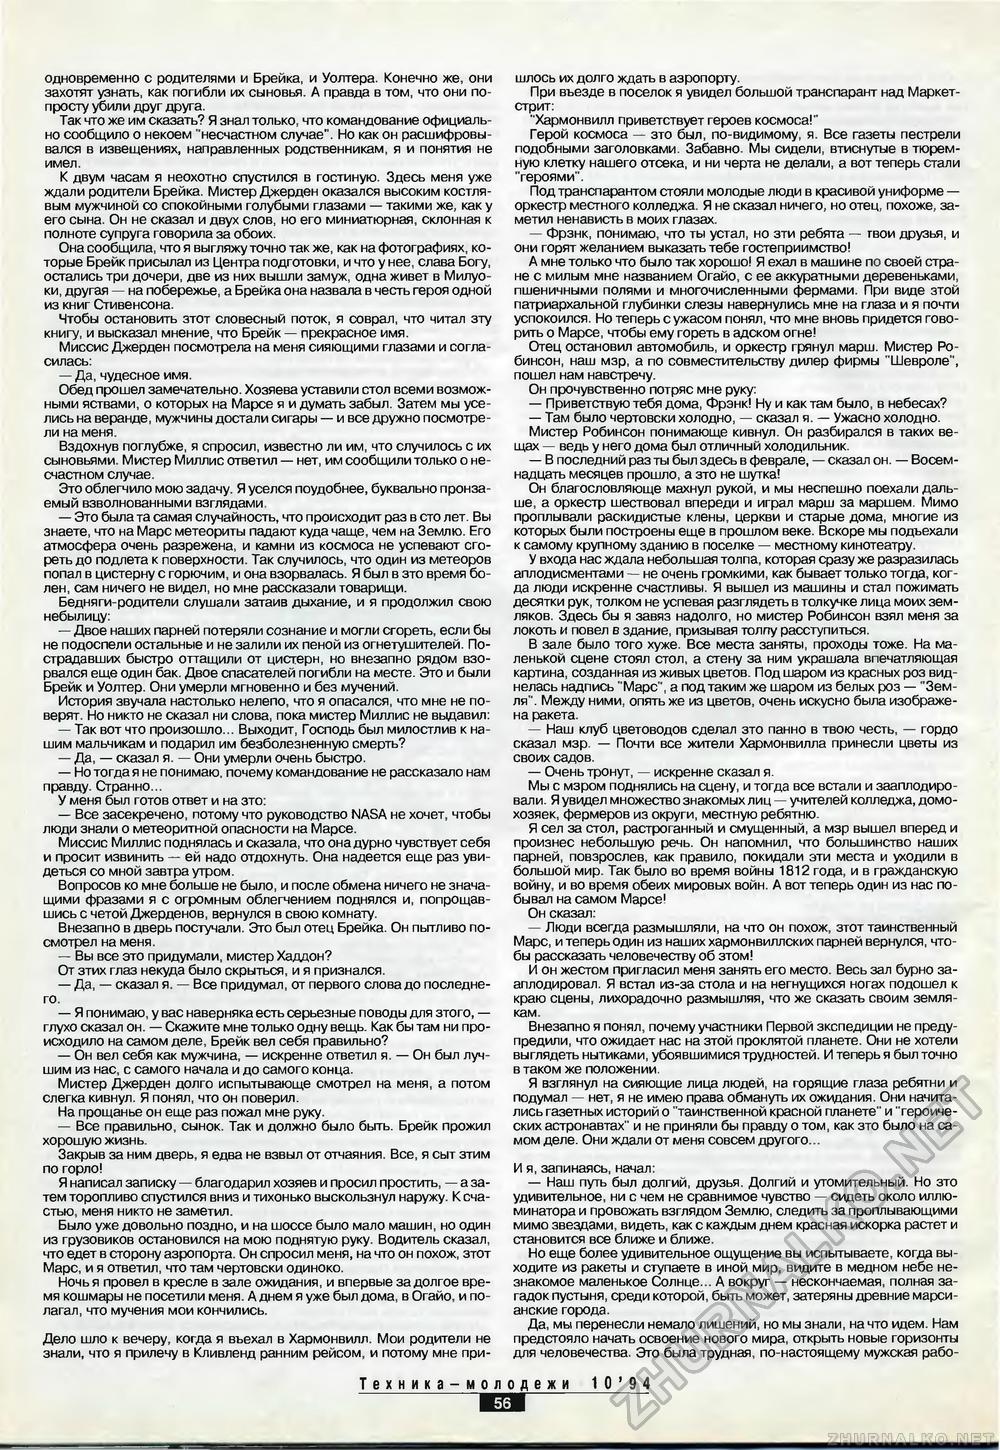 Техника - молодёжи 1994-10, страница 58